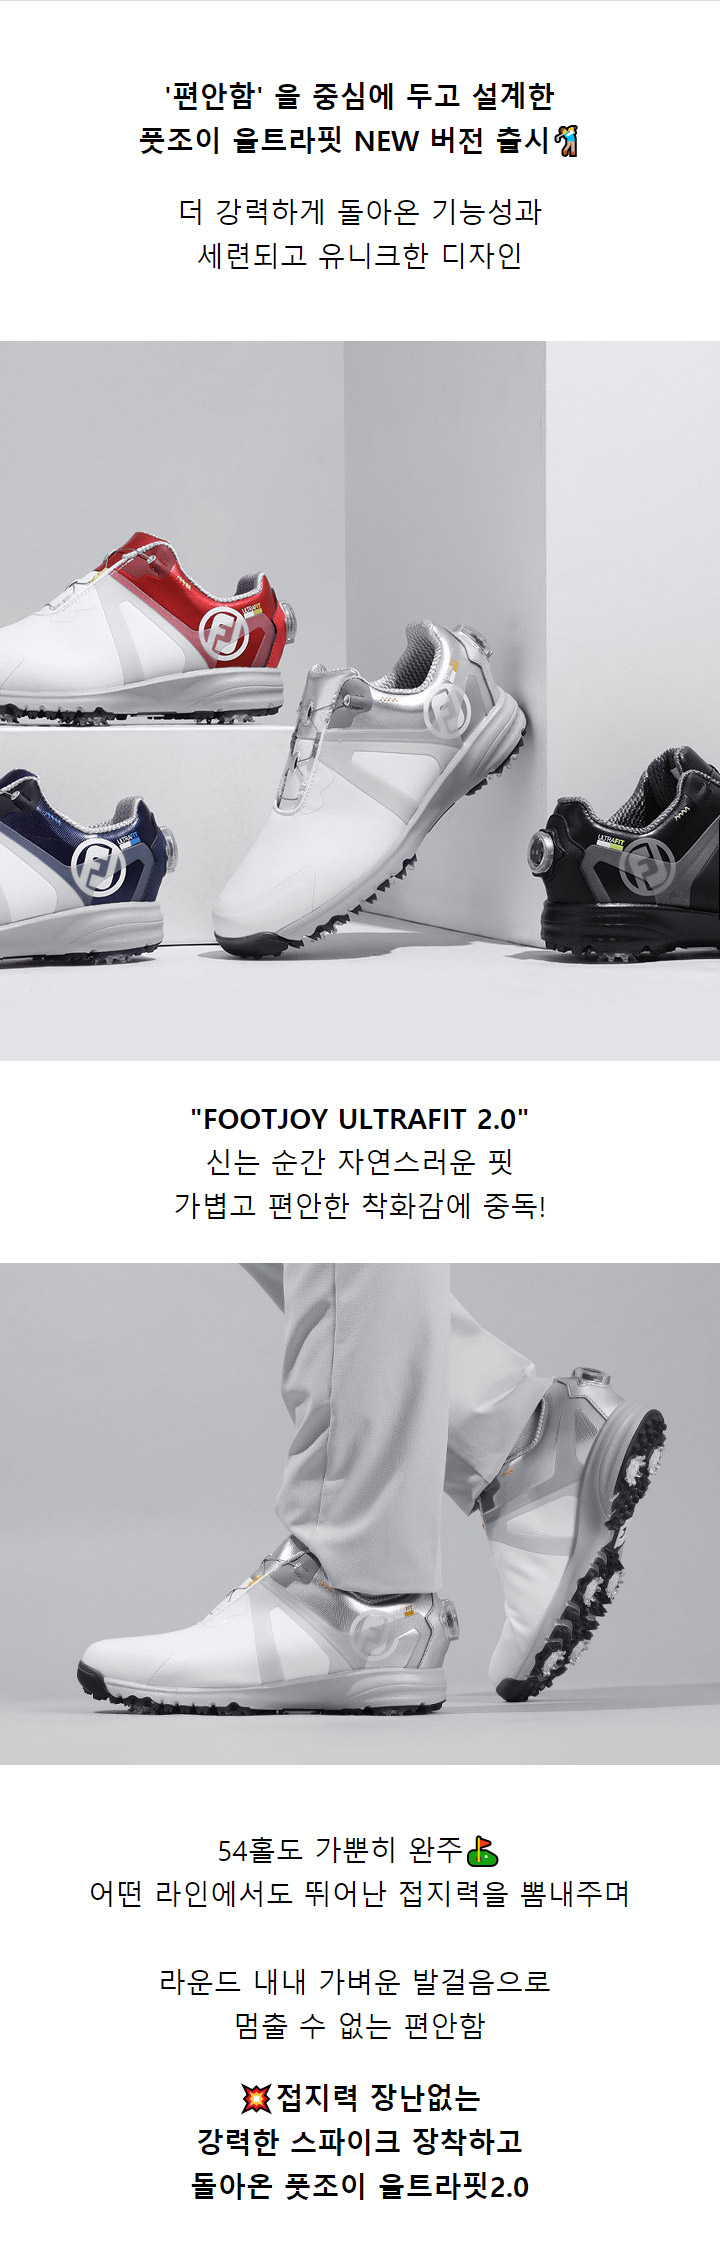 footjoy_ultrapit_20_boa_m_shoes_21_1_01.jpg